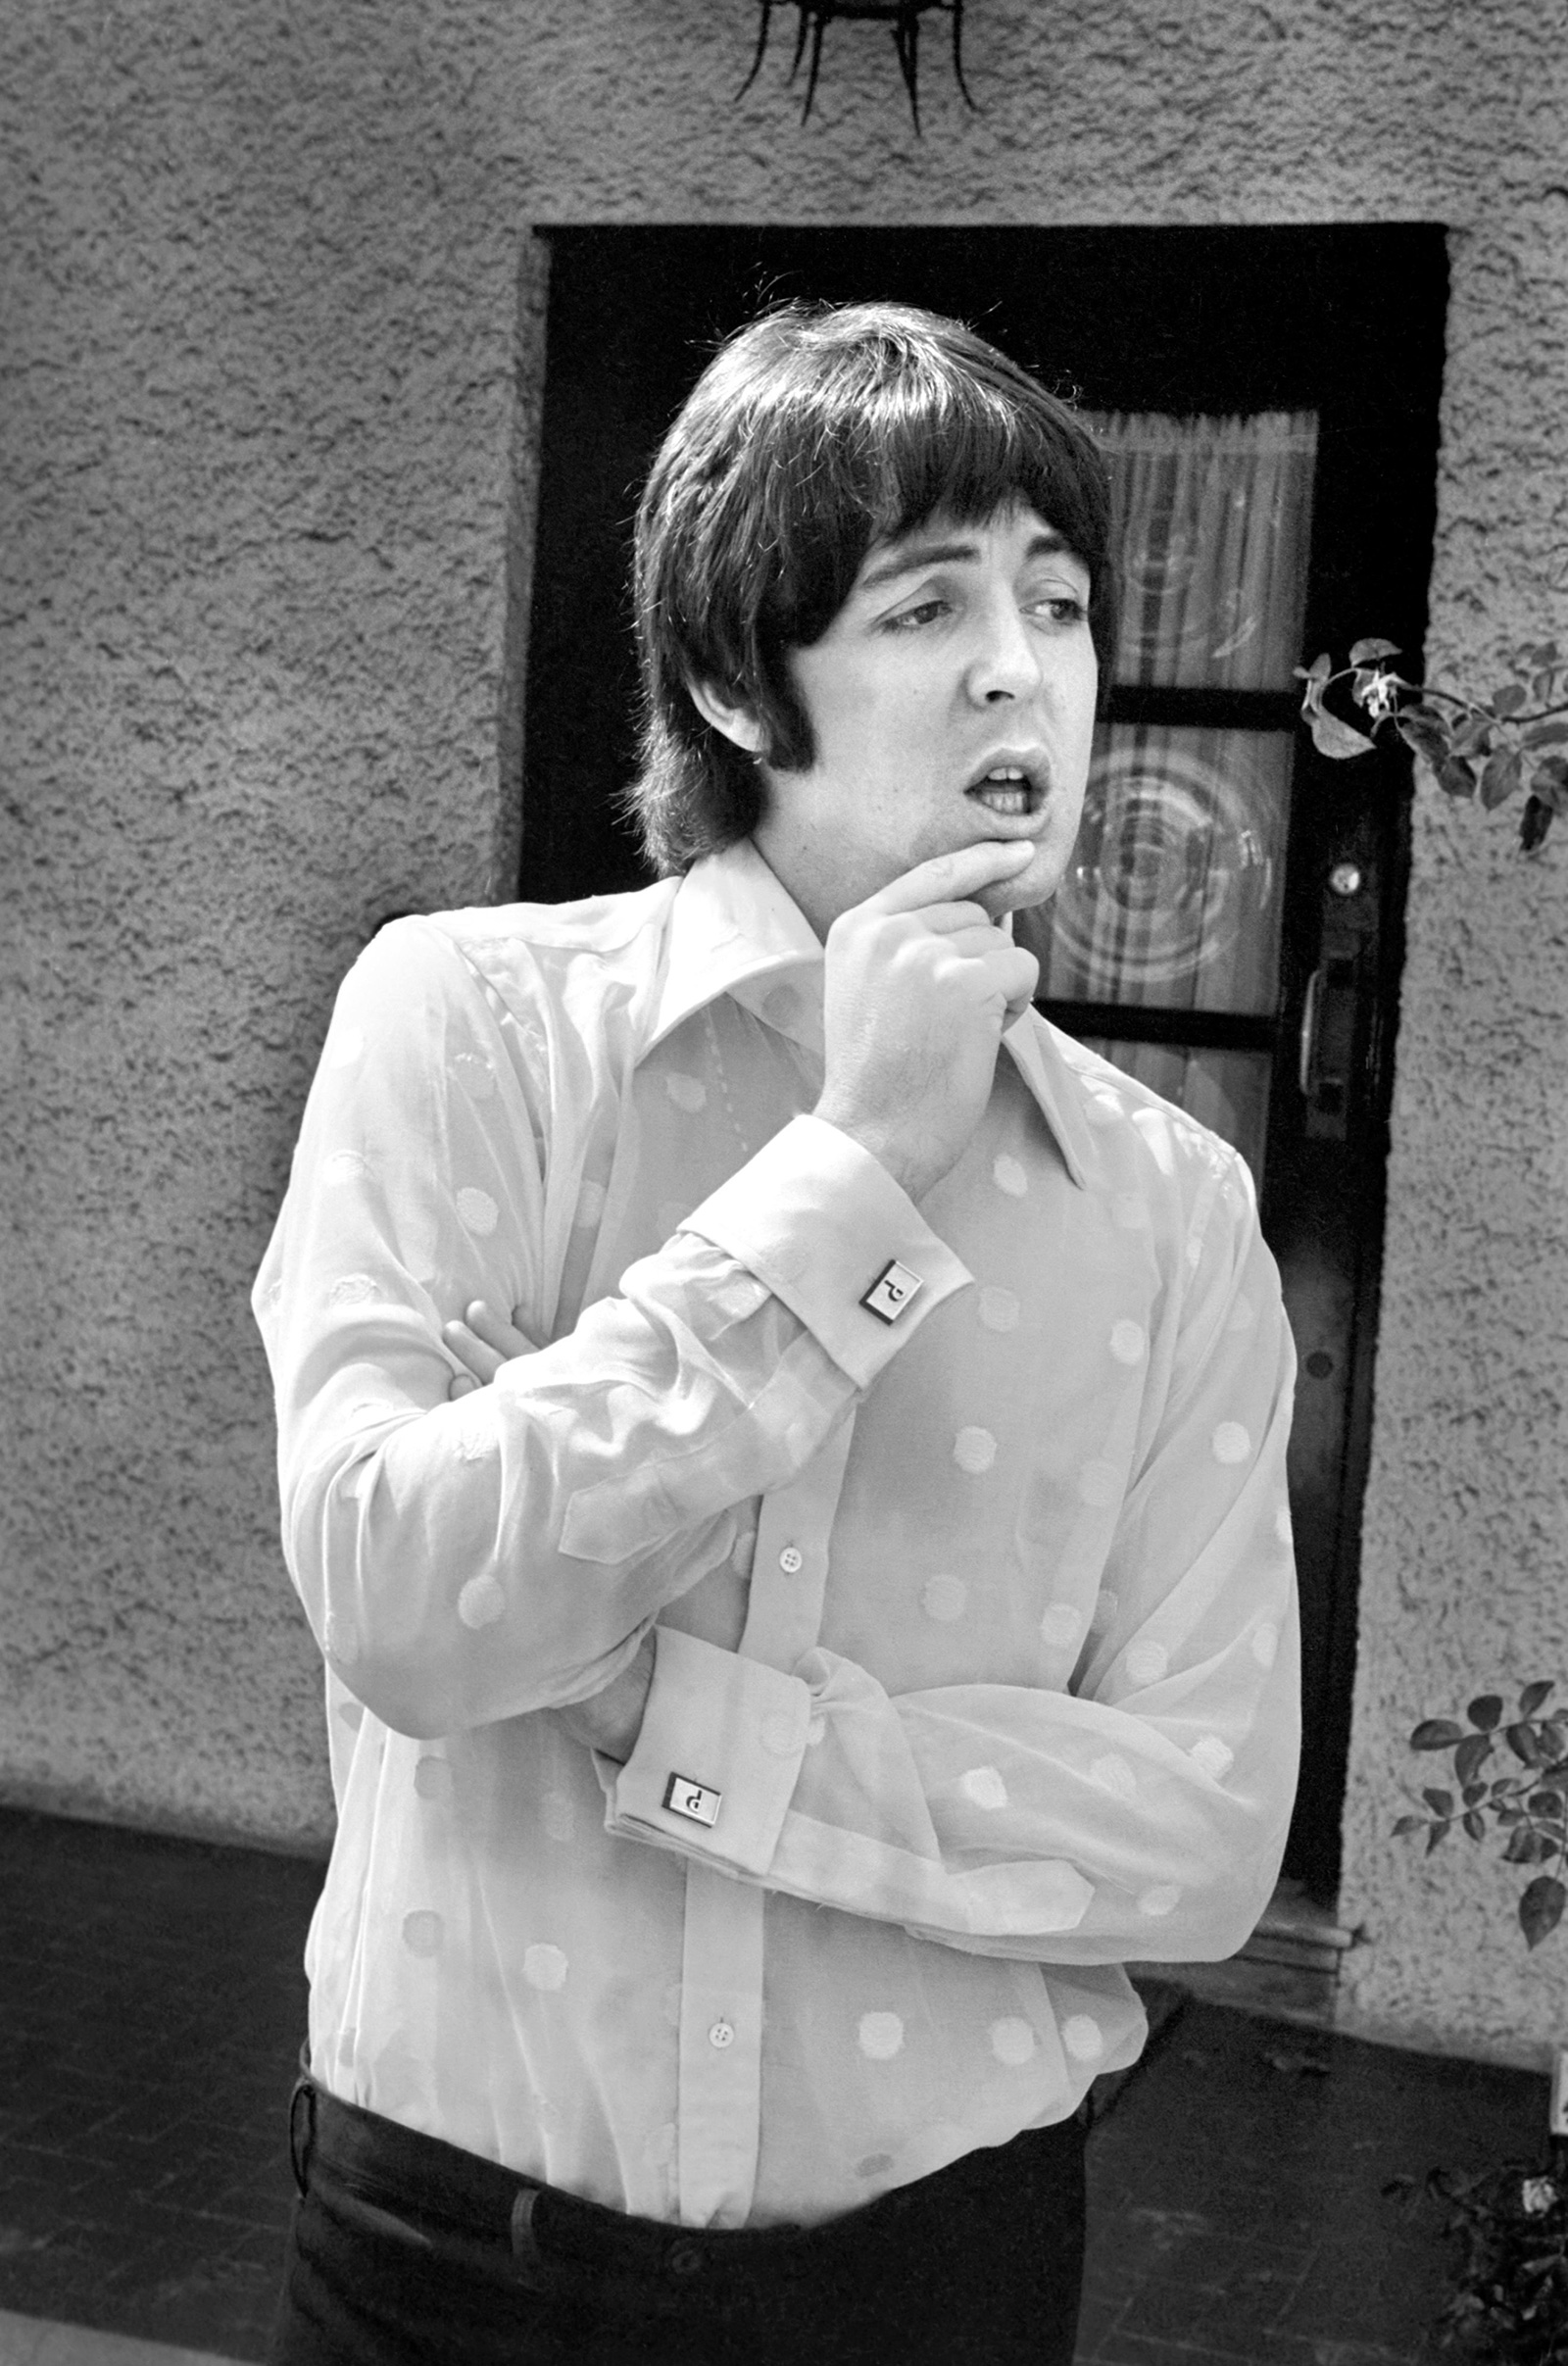 Paul McCartney at 80: A life of fun-loving fashion - CNN Style